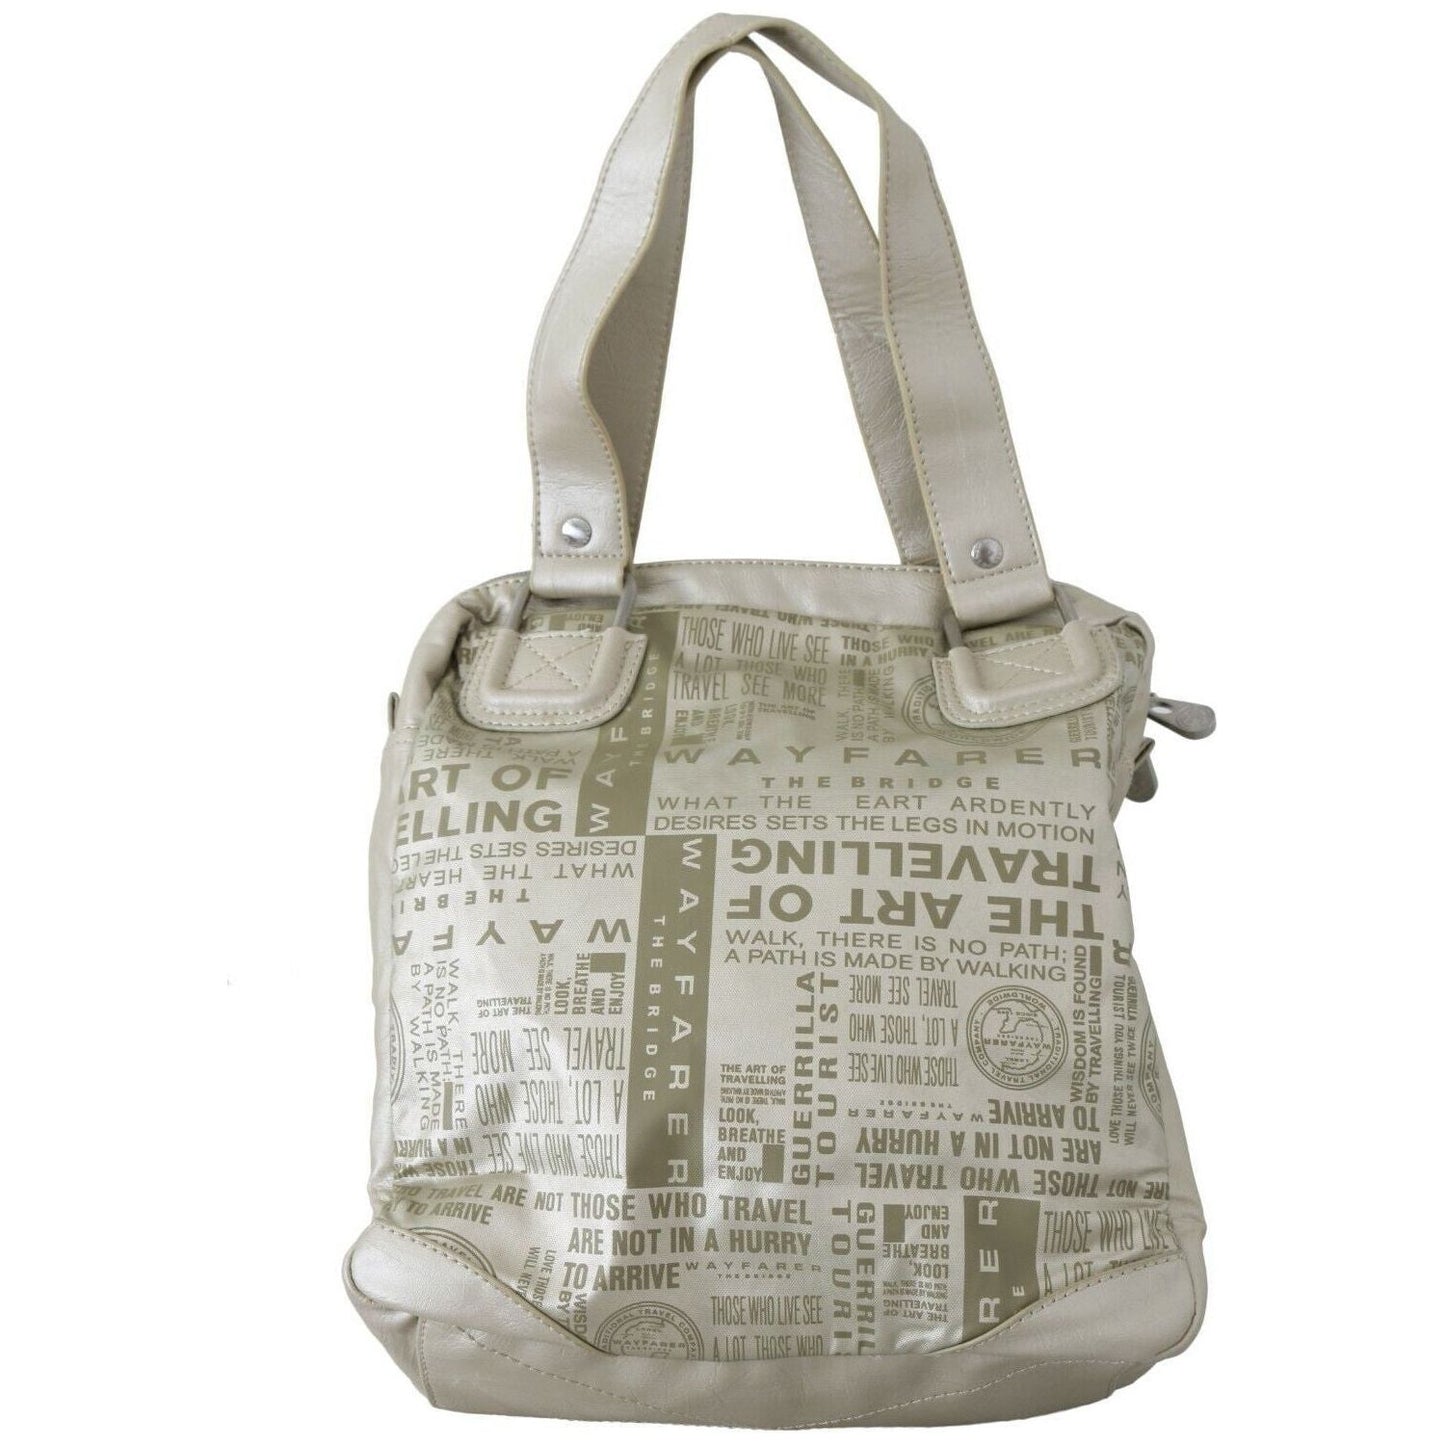 WAYFARER Chic White Fabric Shoulder Bag WOMAN TOTES white-printed-handbag-shoulder-fabric-purse